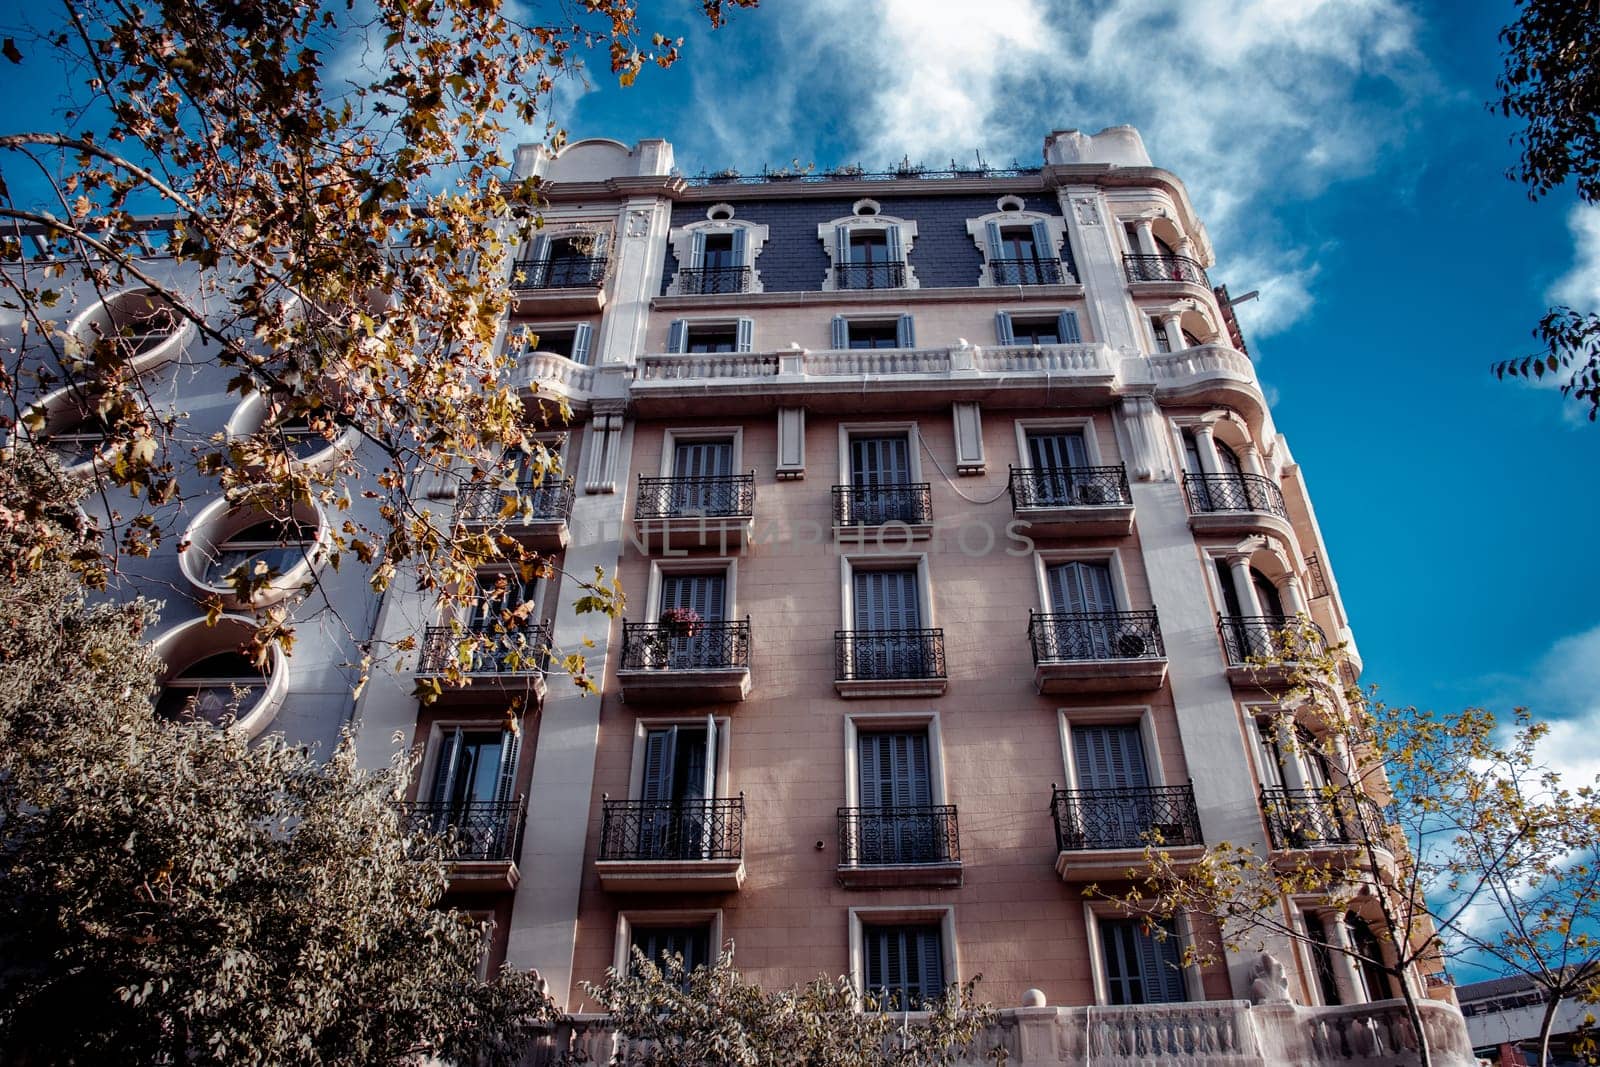 Old apartment building with balcony, Barcelona, Catalonia. Beautiful urban scenery photography. by _Nataly_Nati_